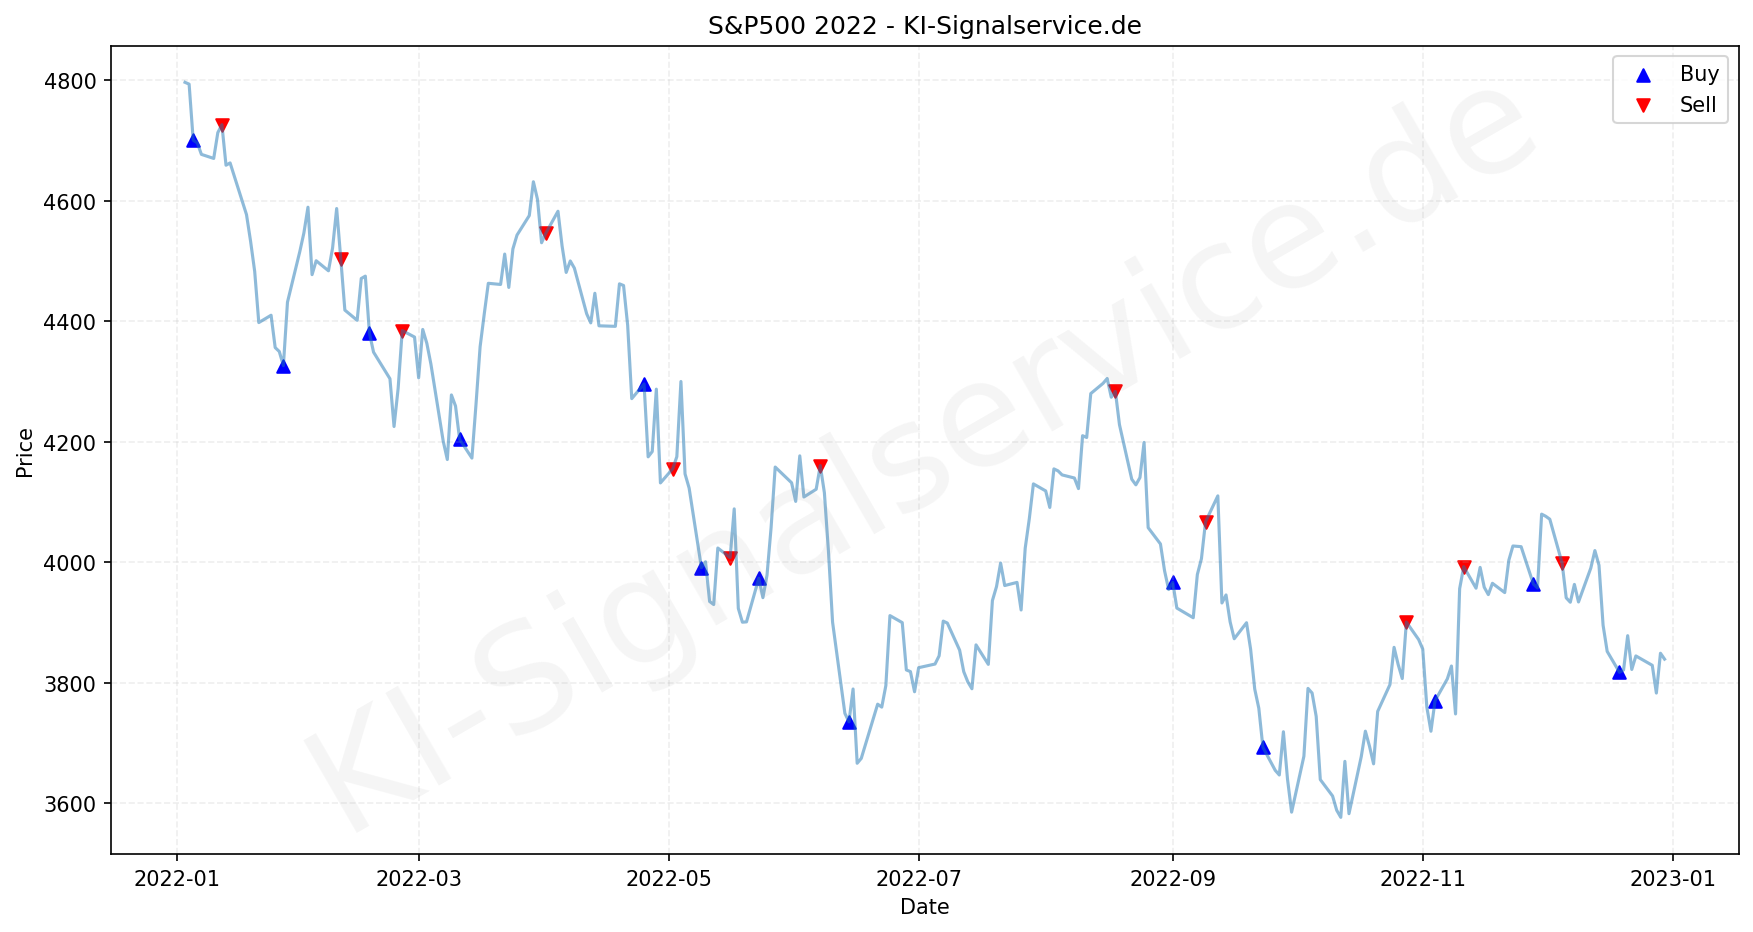 SP500 Index Performance Chart - KI Tradingsignale 2022